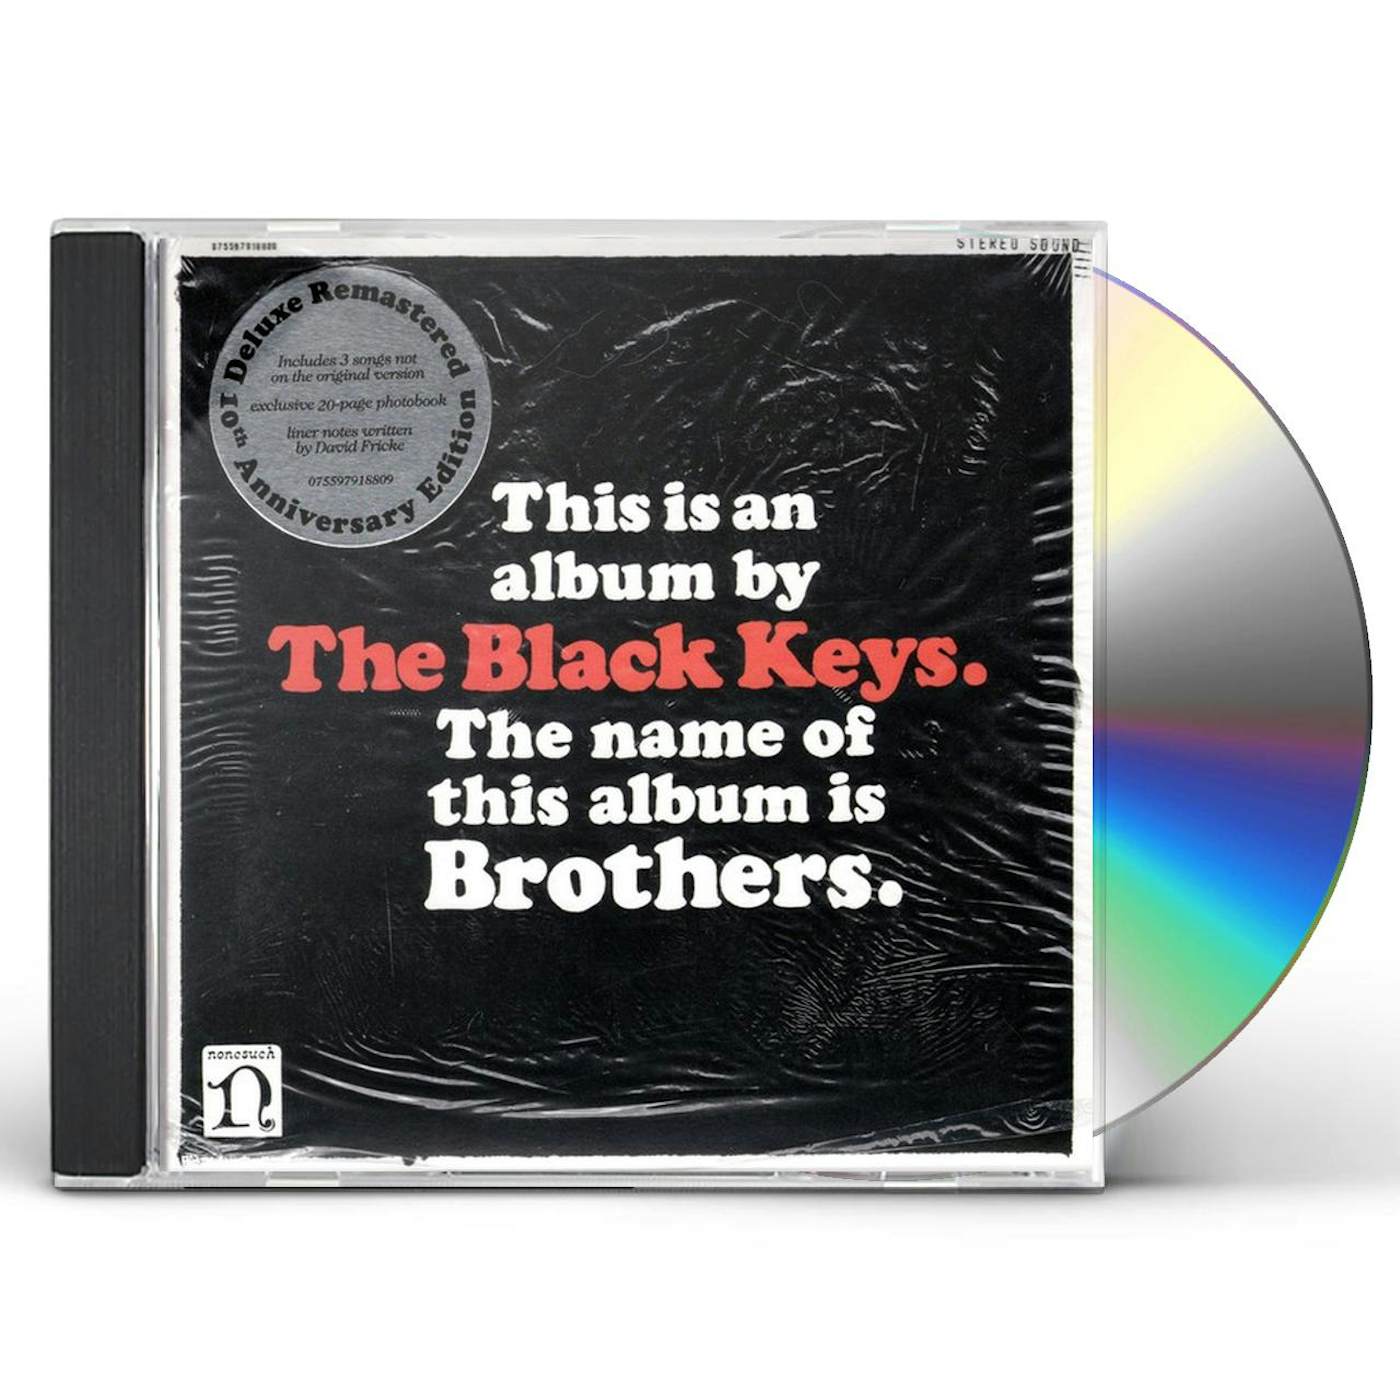 The Black Keys El Camino Vinyl Record